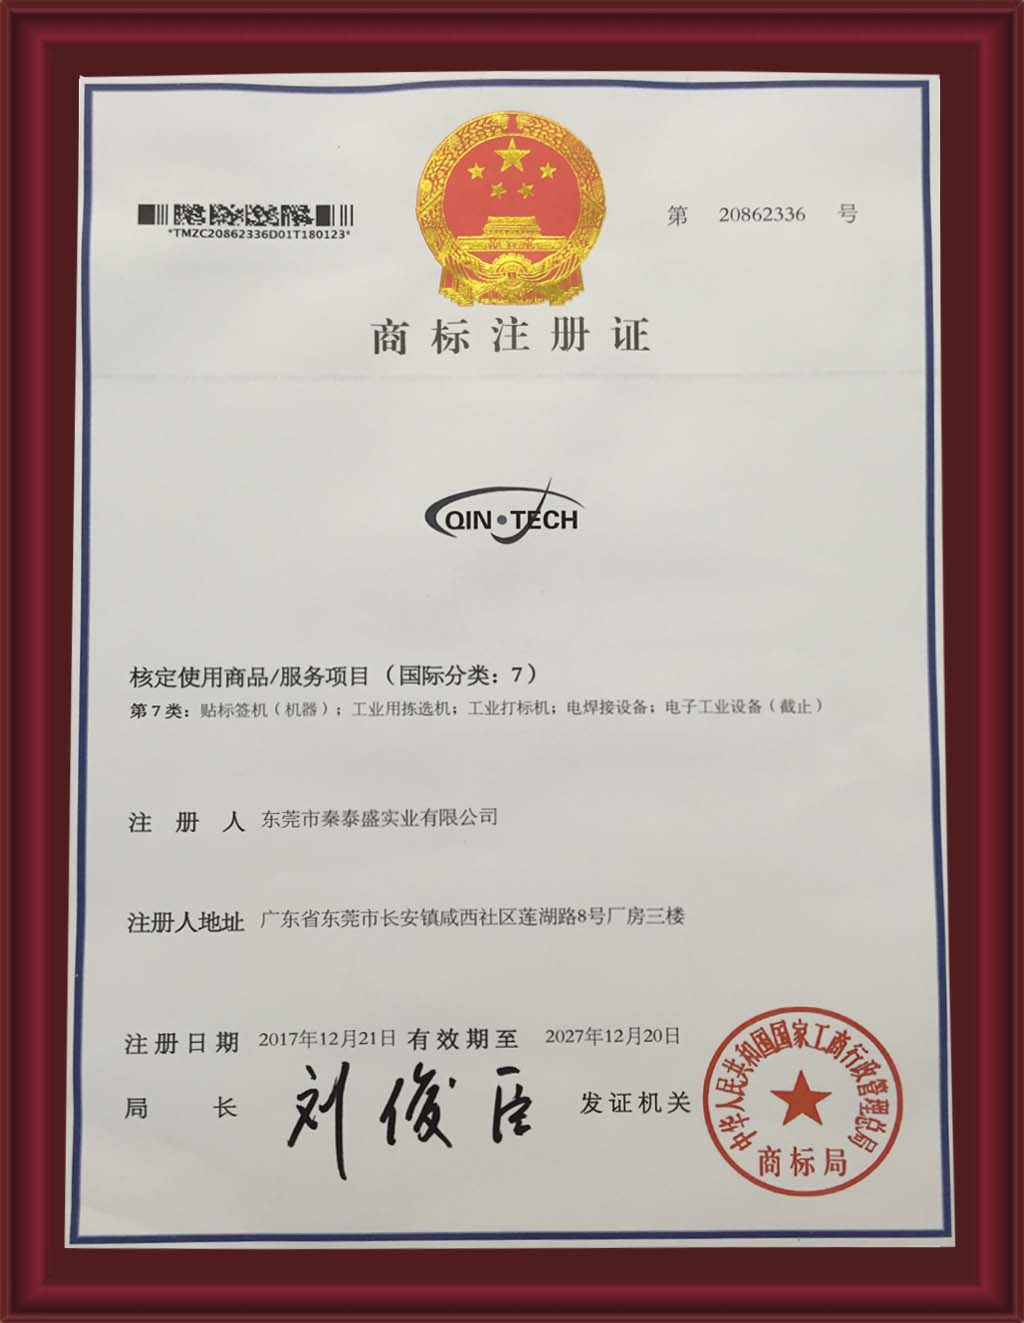 English LOGO trademark registration certificate